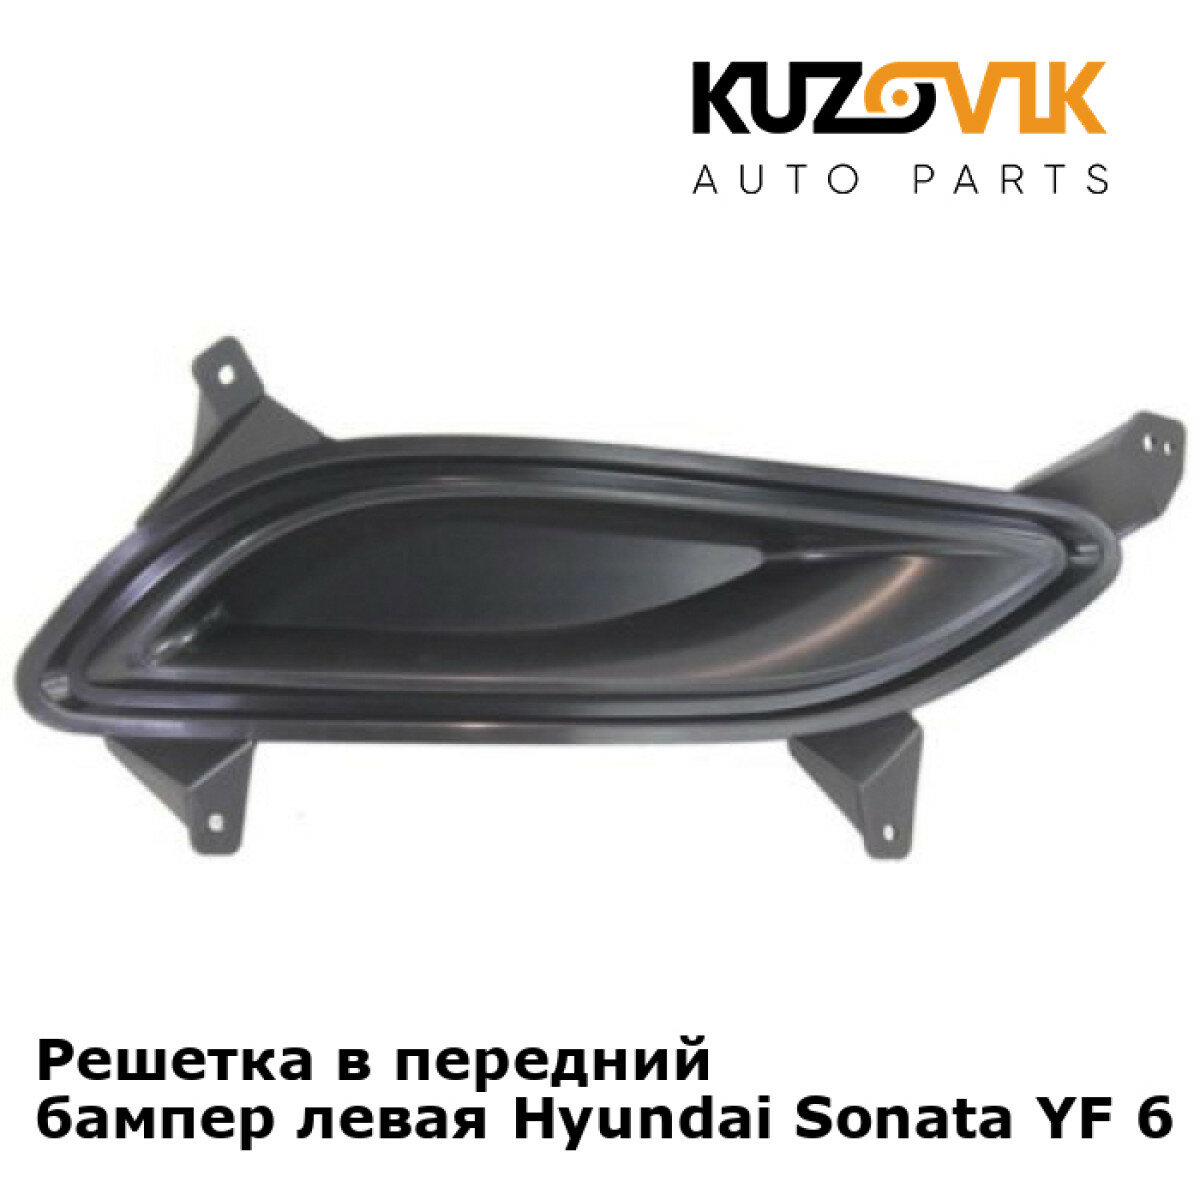 Решетка в передний бампер левая Hyundai Sonata YF 6 (2010-2014)